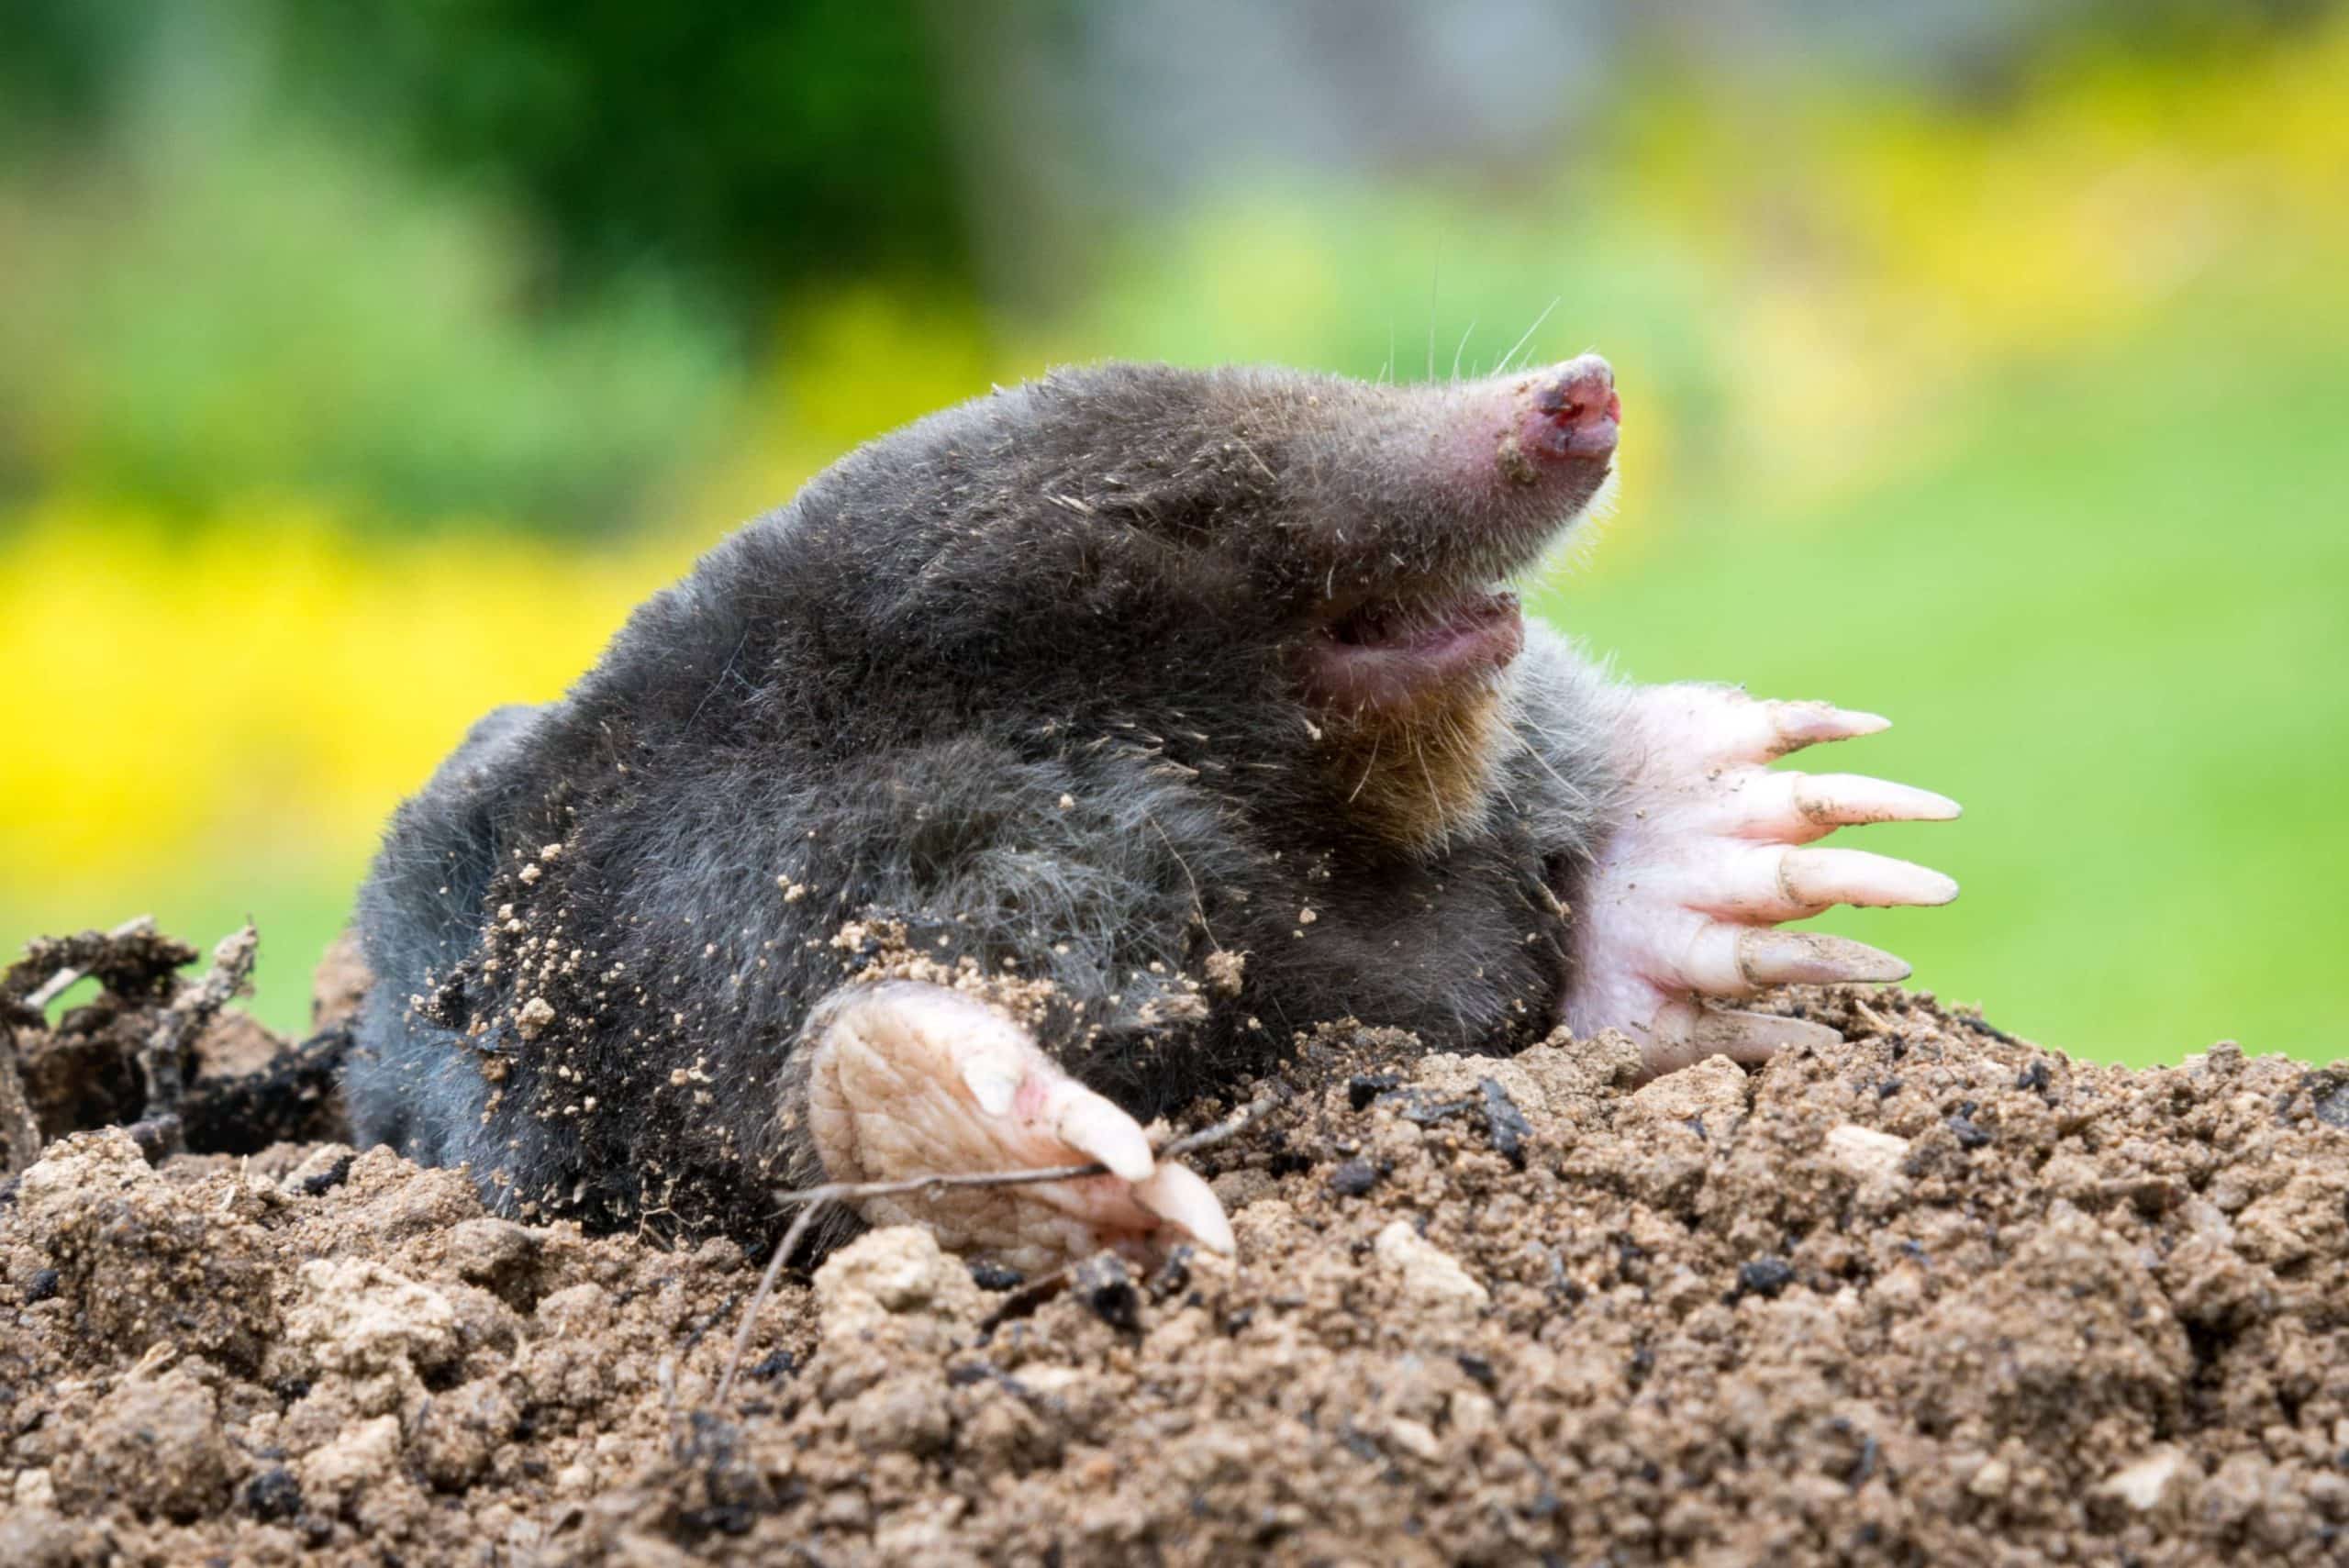 Mole in a garden tearing up the soil.